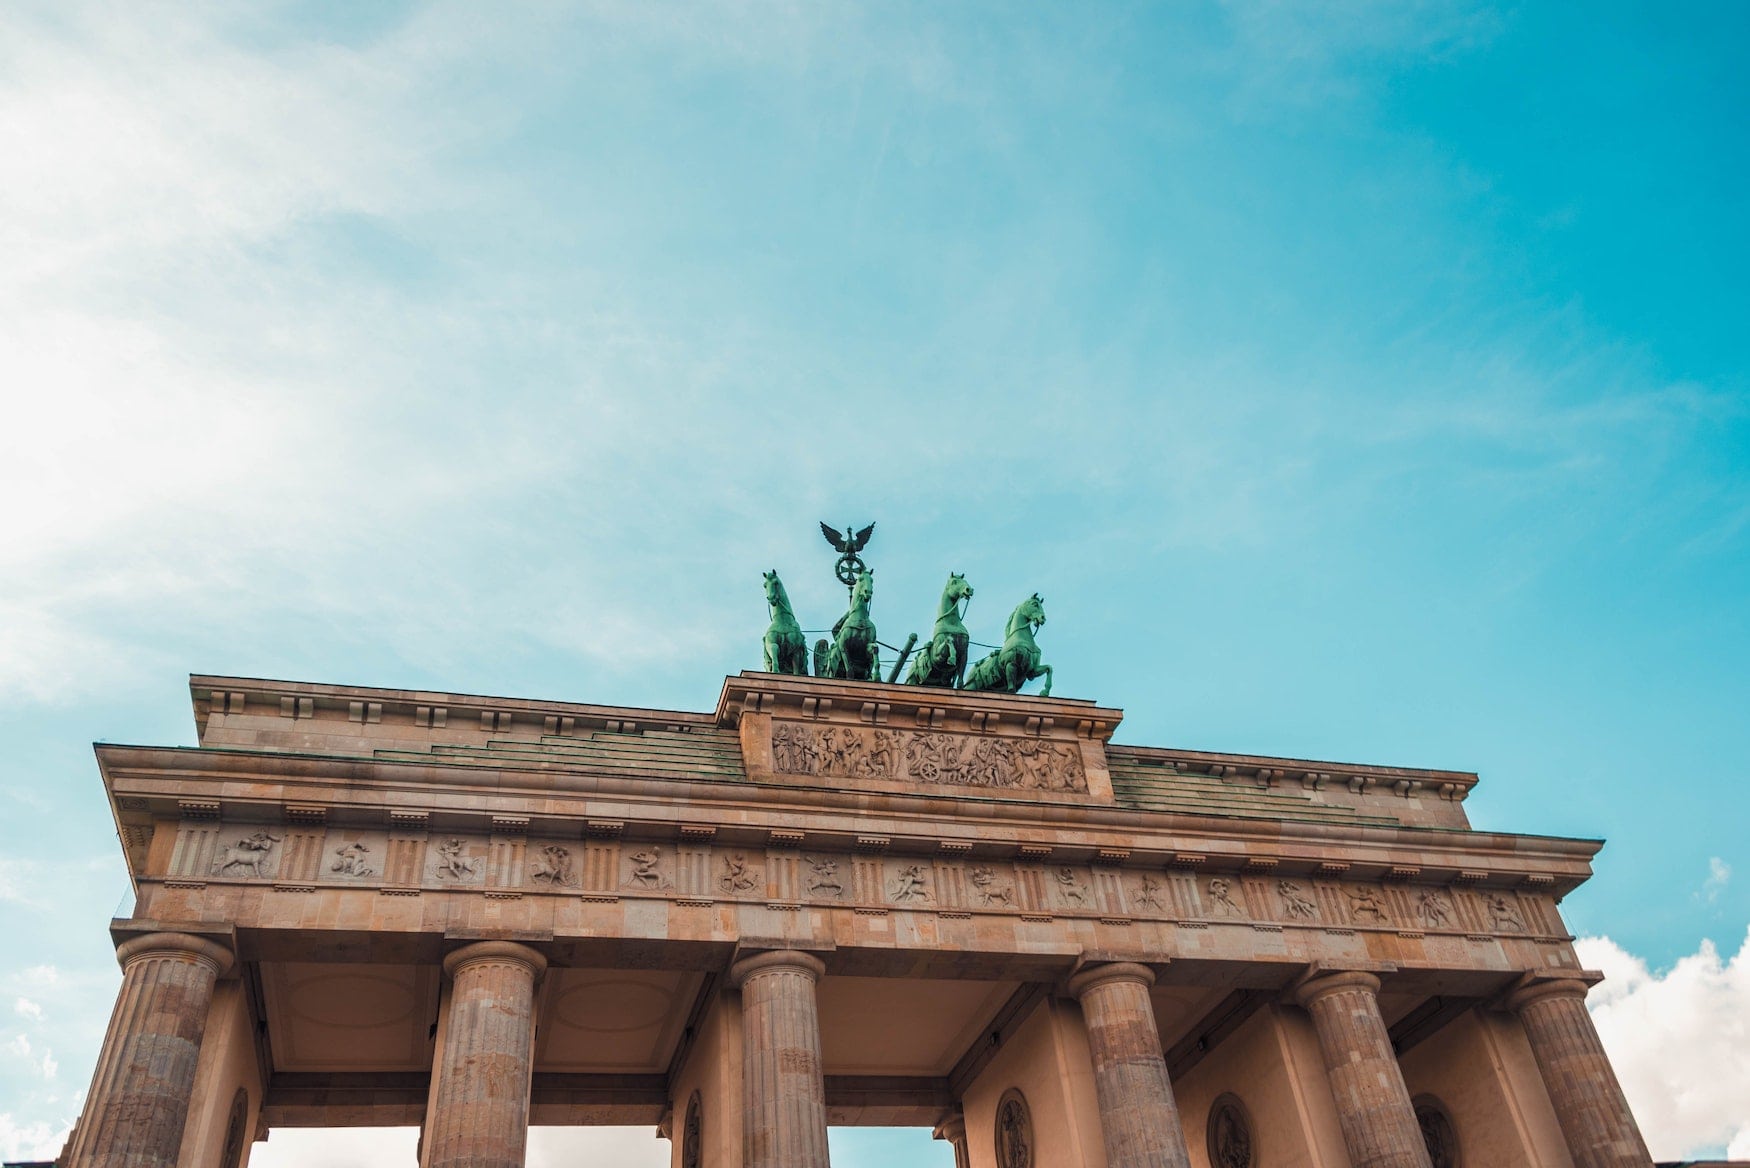 Detail of the Brandenburg Gate in Berlin